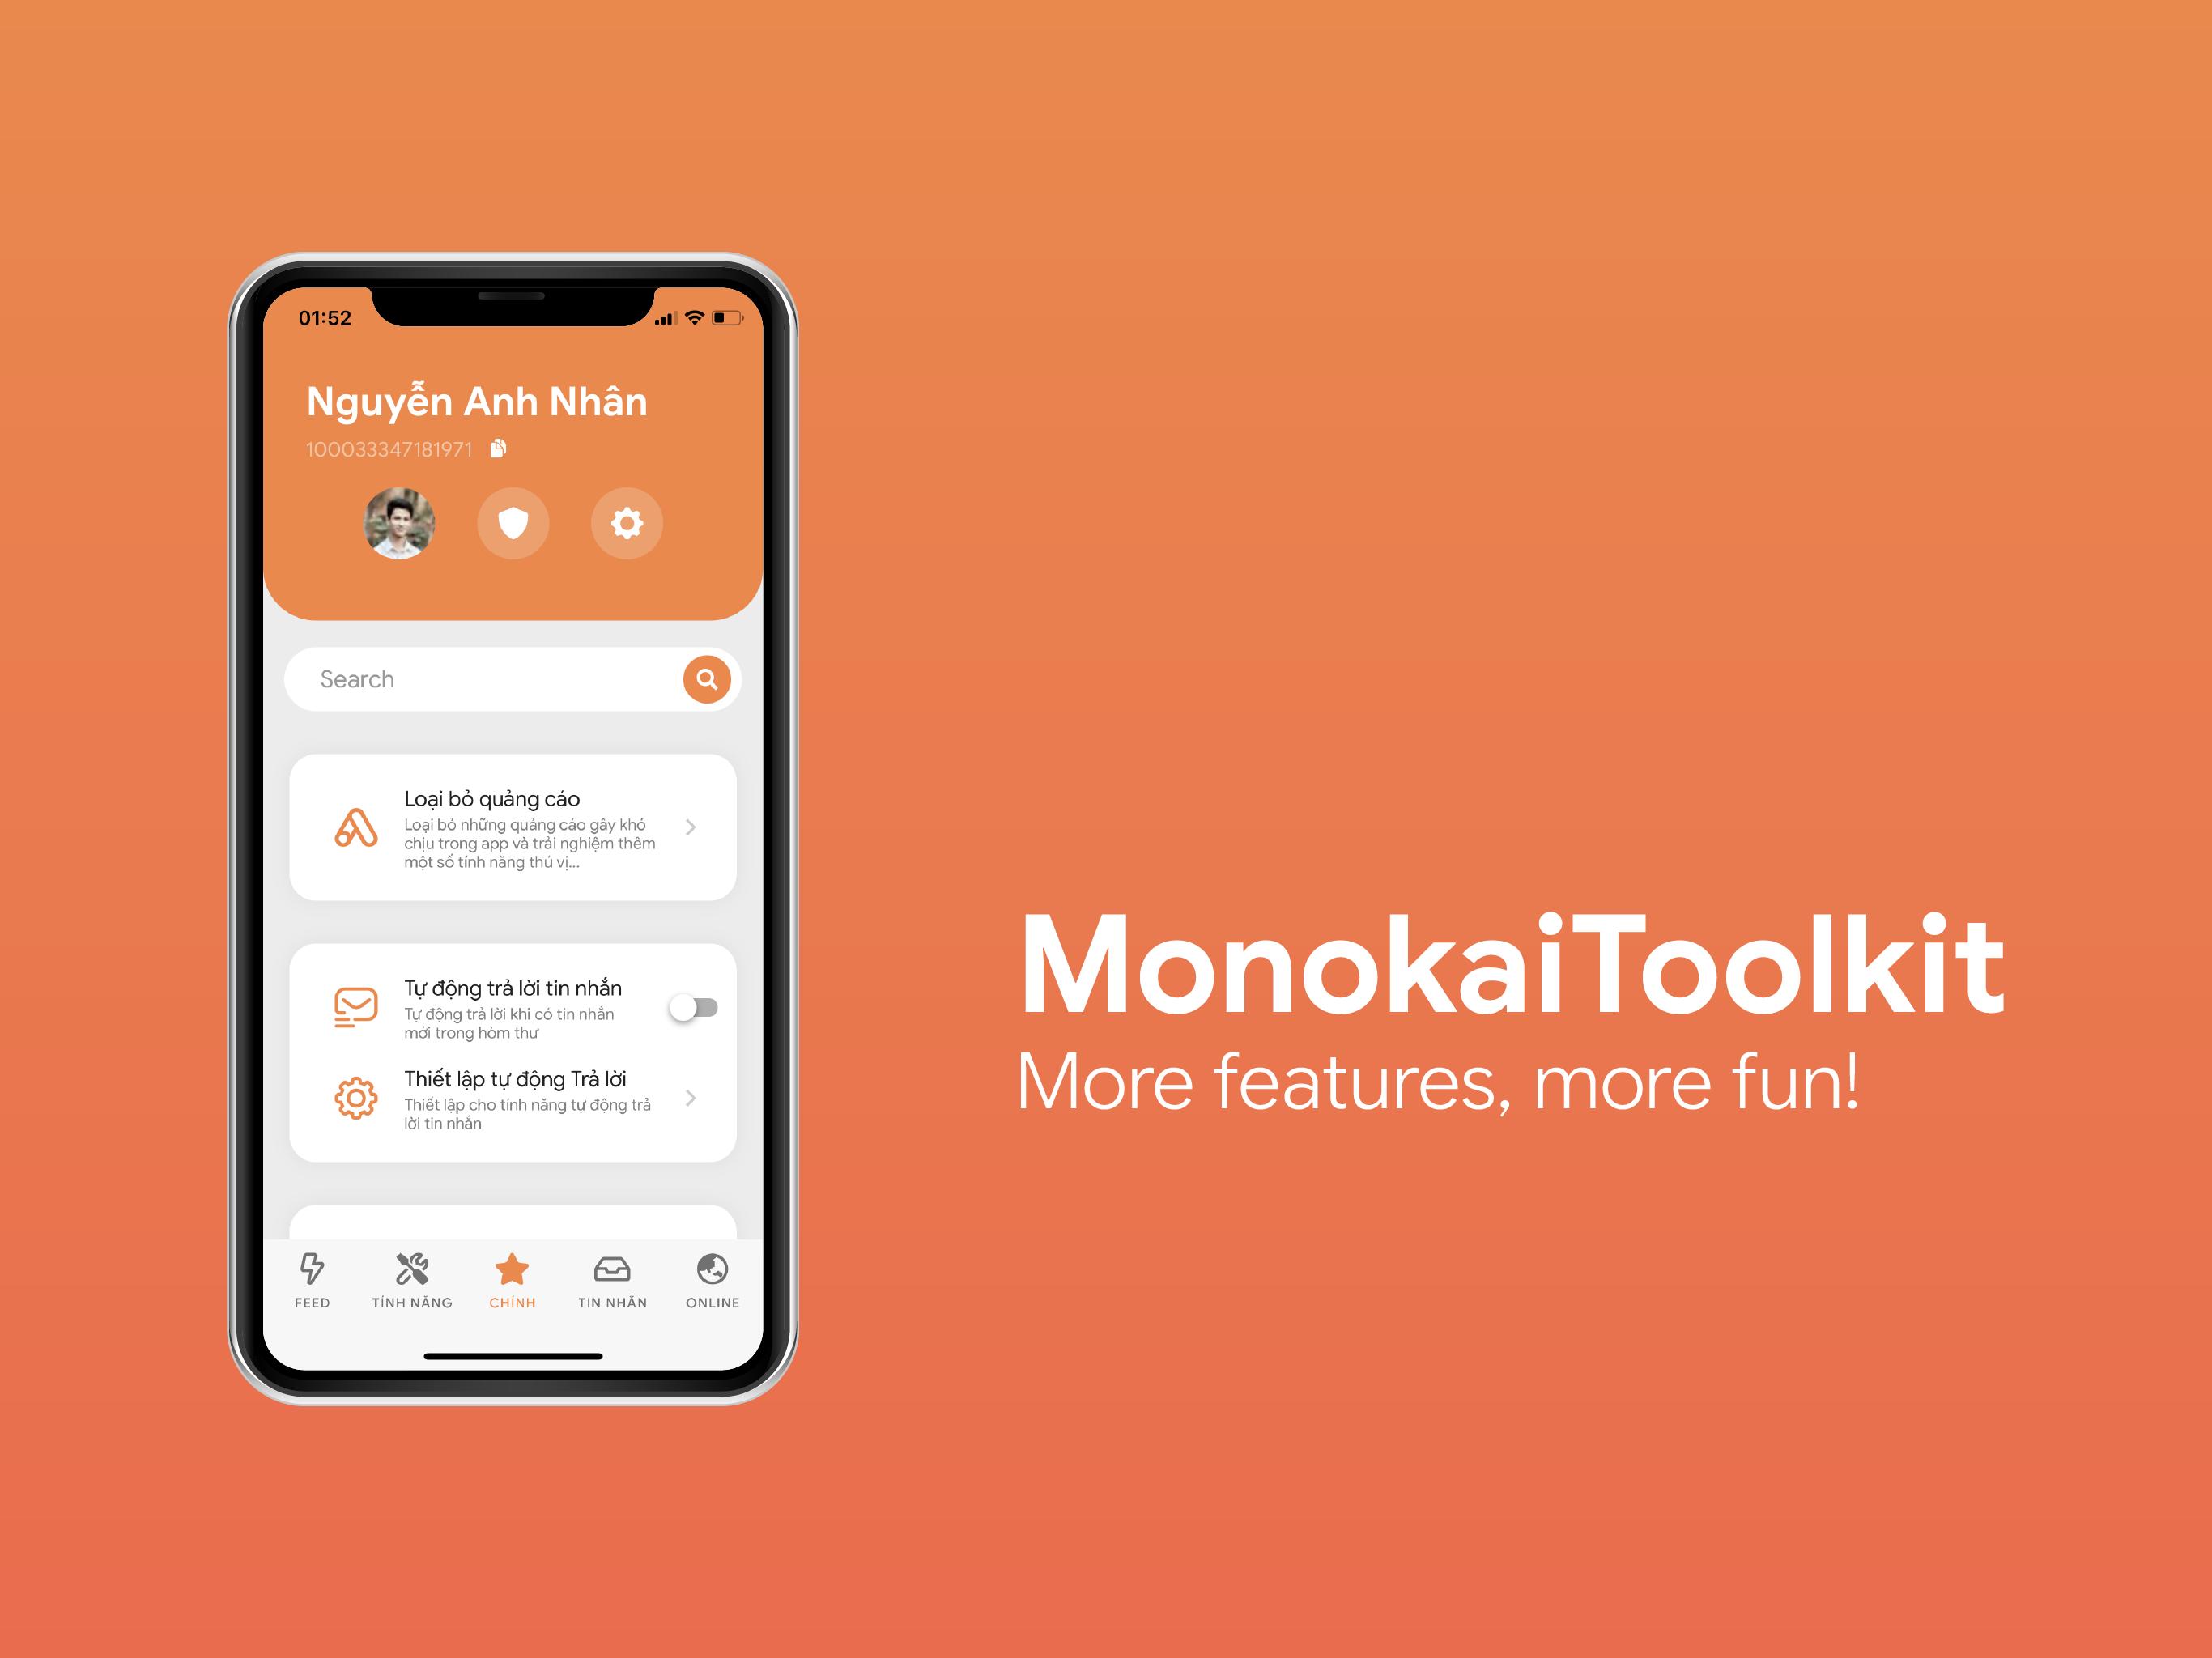 MonokaiToolkit Super Toolkit for Facebook Users 4.7.1 Screenshot 8